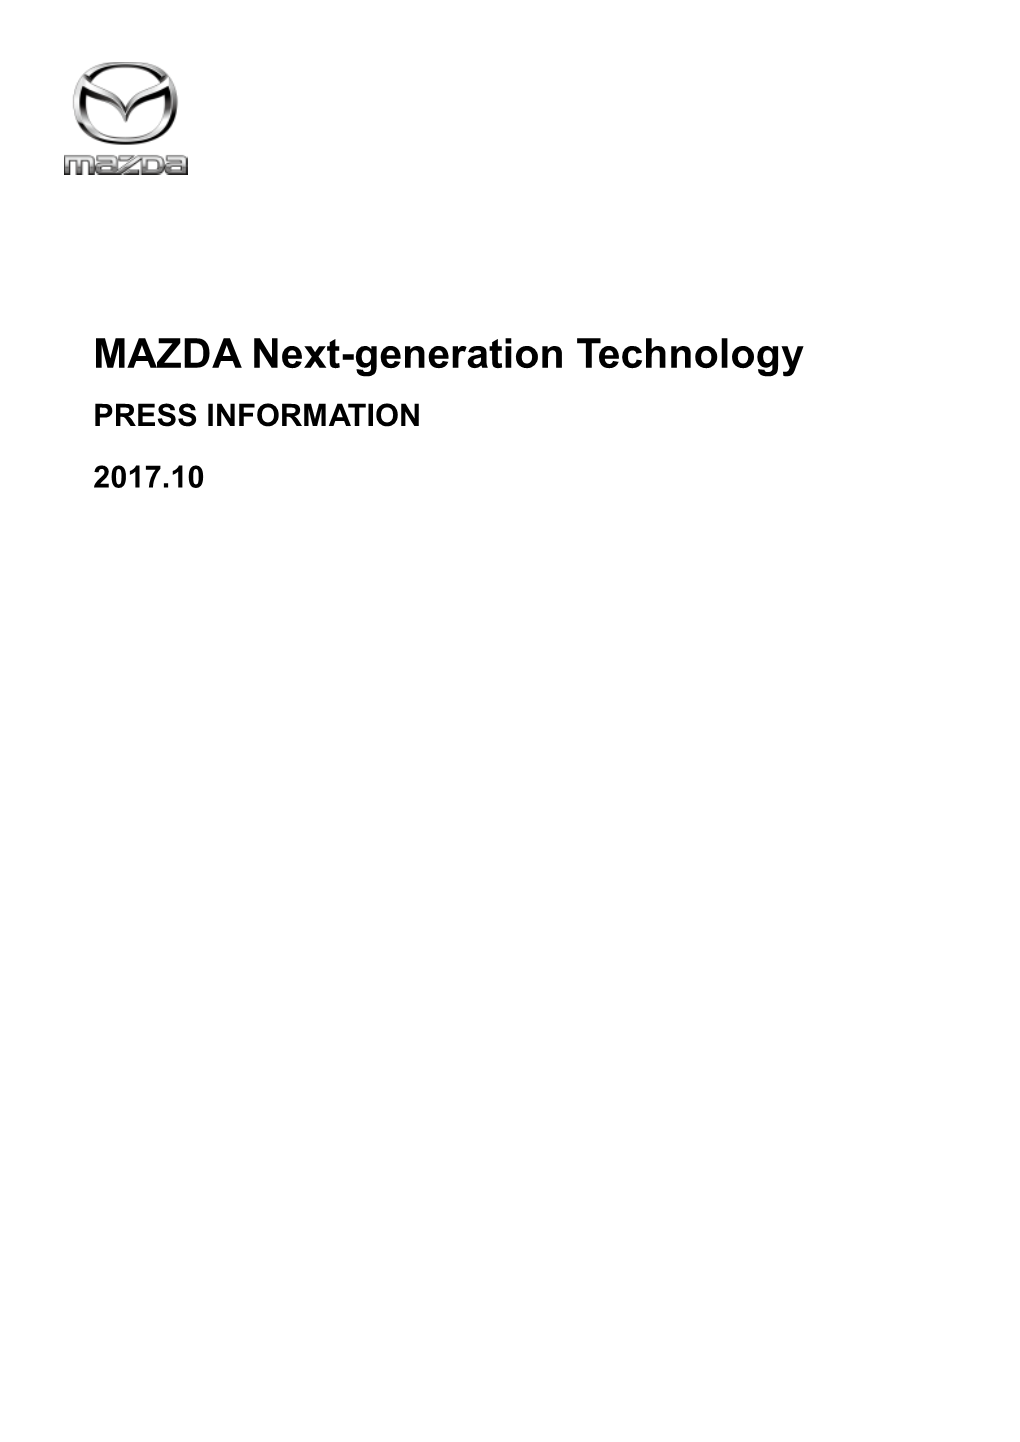 MAZDA Next-Generation Technology PRESS INFORMATION 2017.10